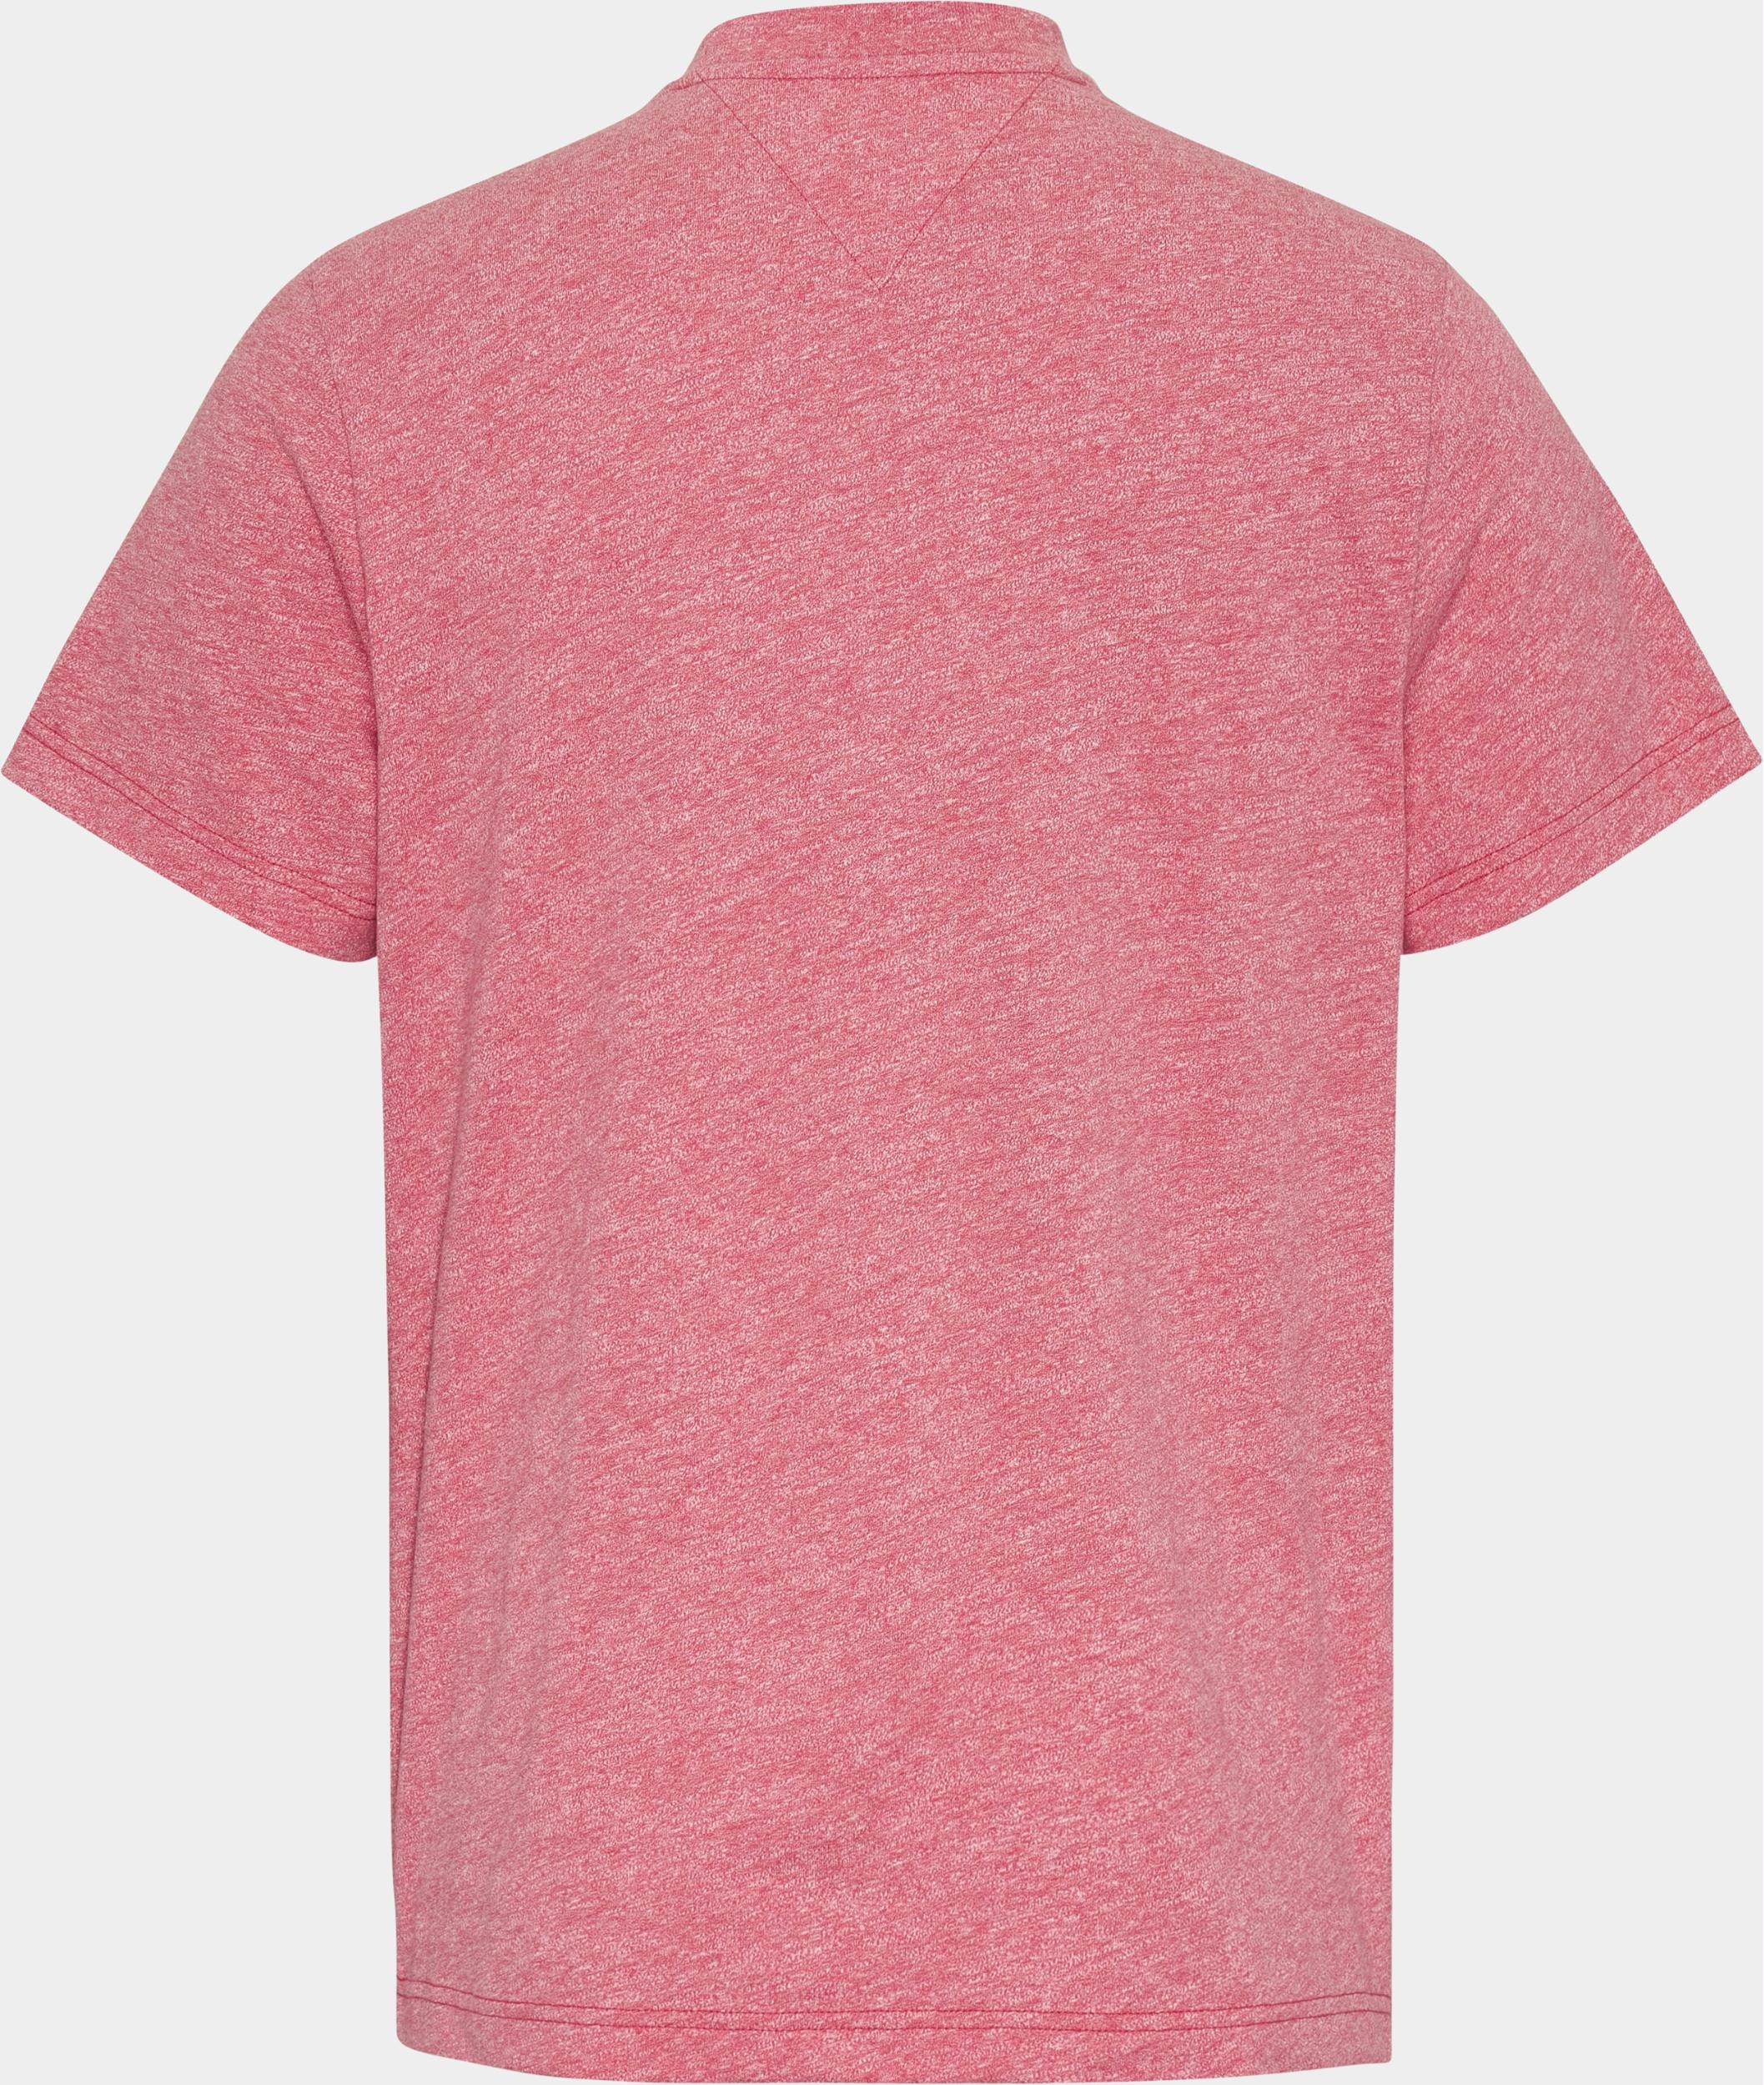 Tommy Jeans T-shirt korte mouw Roze TJM Reg Heathered sl DM0DM16322/TJN